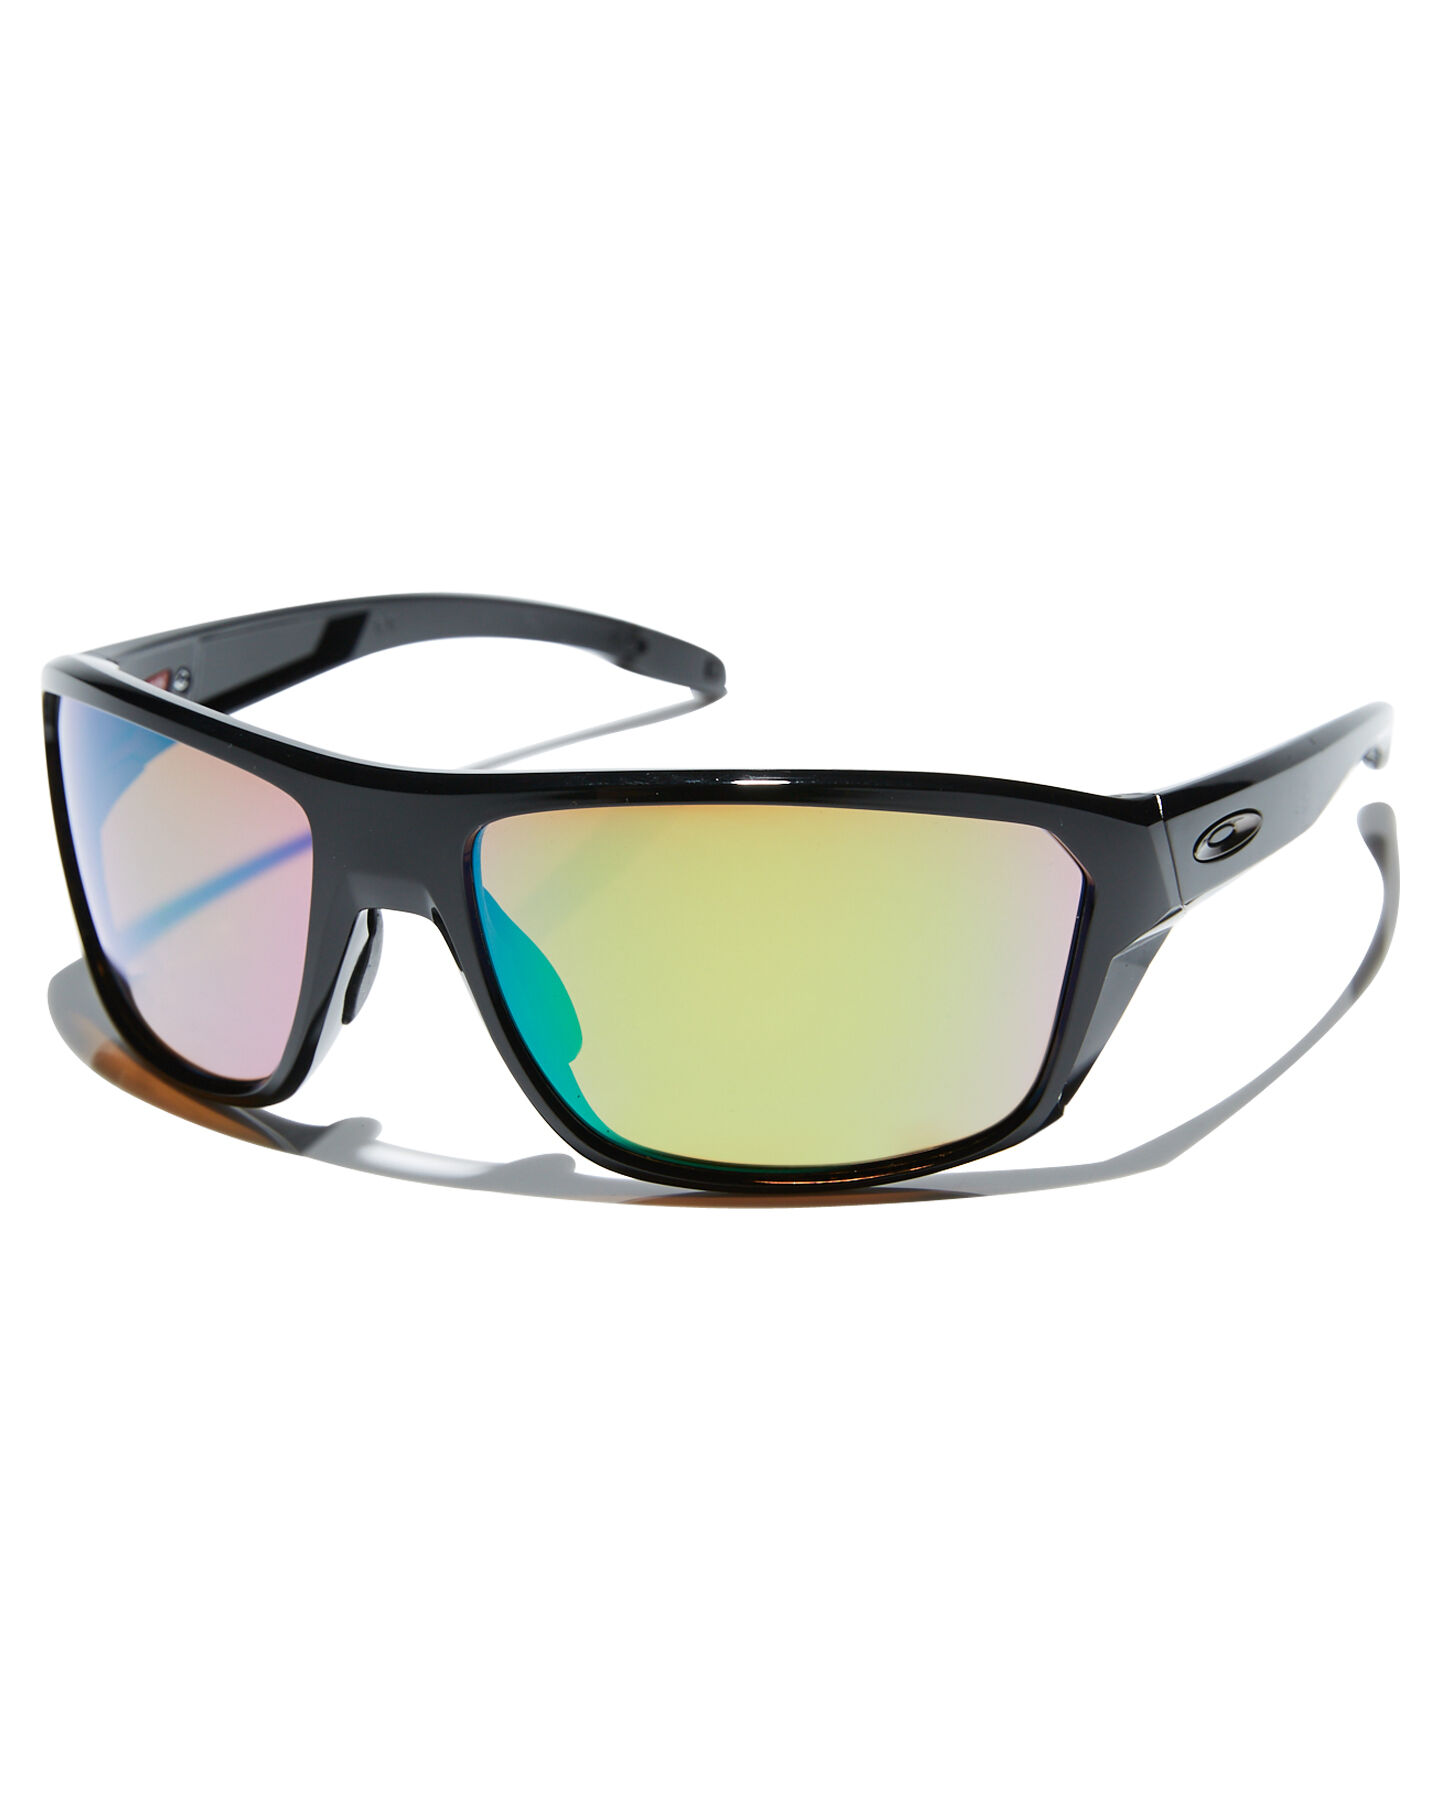 oakley polarized sunglasses for fishing